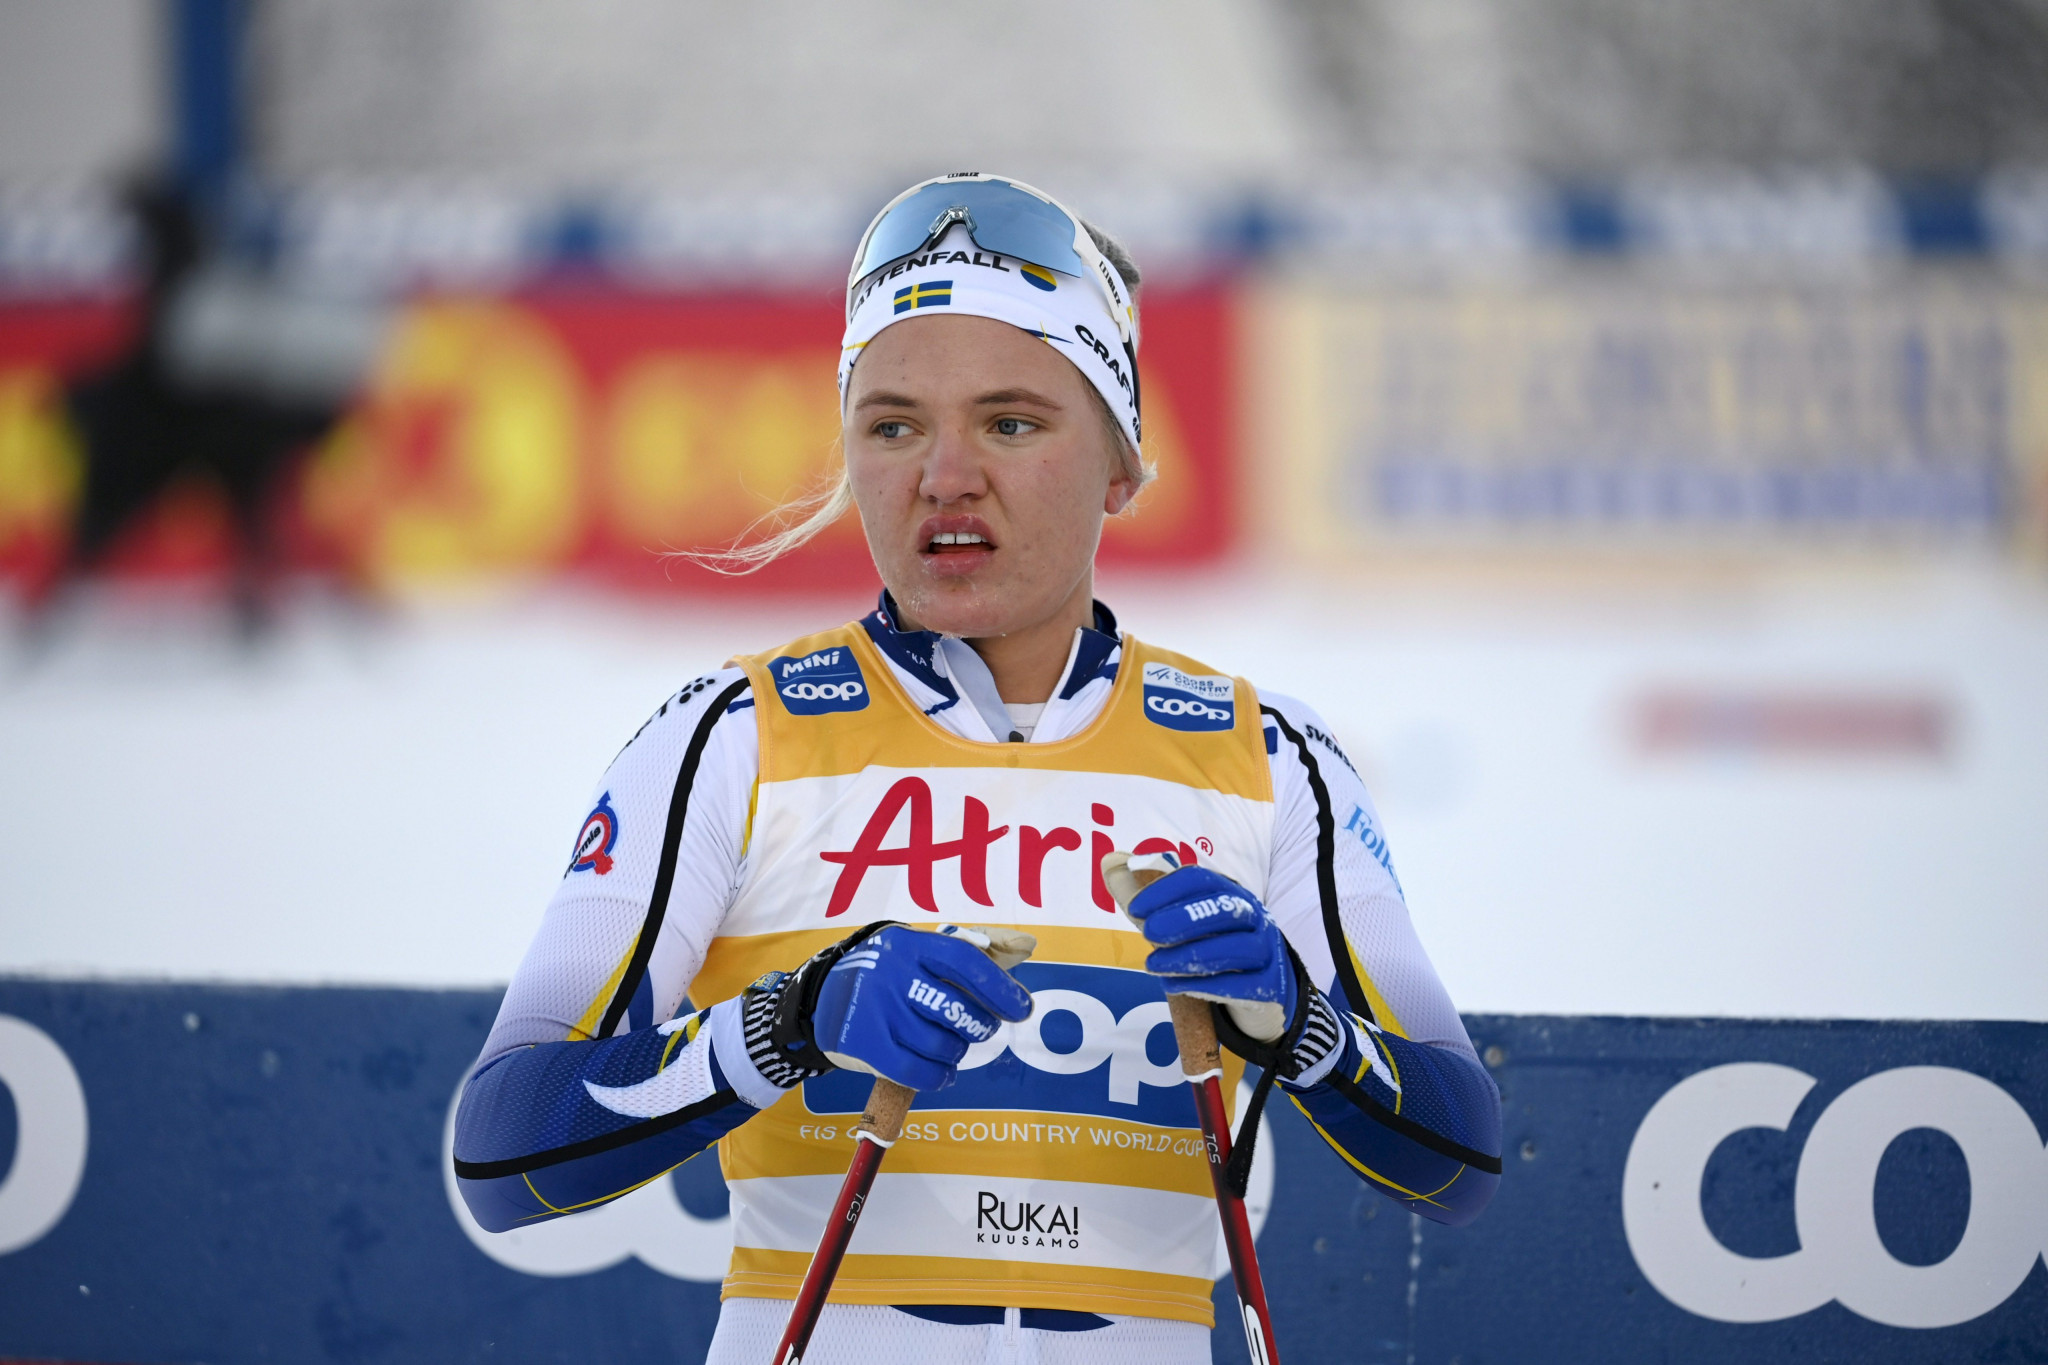 Swedish cross-country skier Svahn given coronavirus all-clear for Tour de Ski after false positive